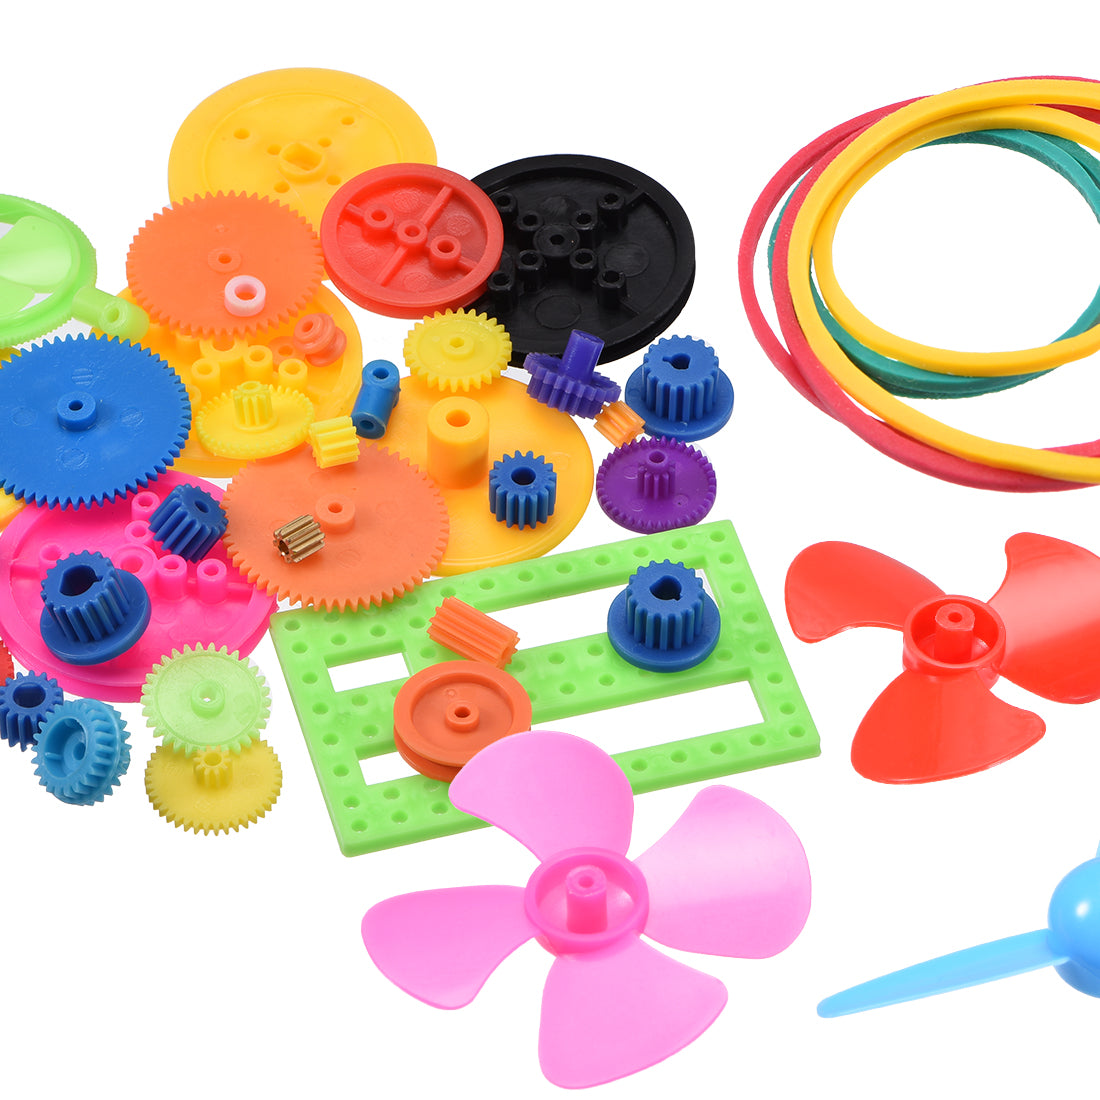 uxcell Uxcell 56 Pcs Plastic Gear Package Kit DIY Gear Assortment accessories set